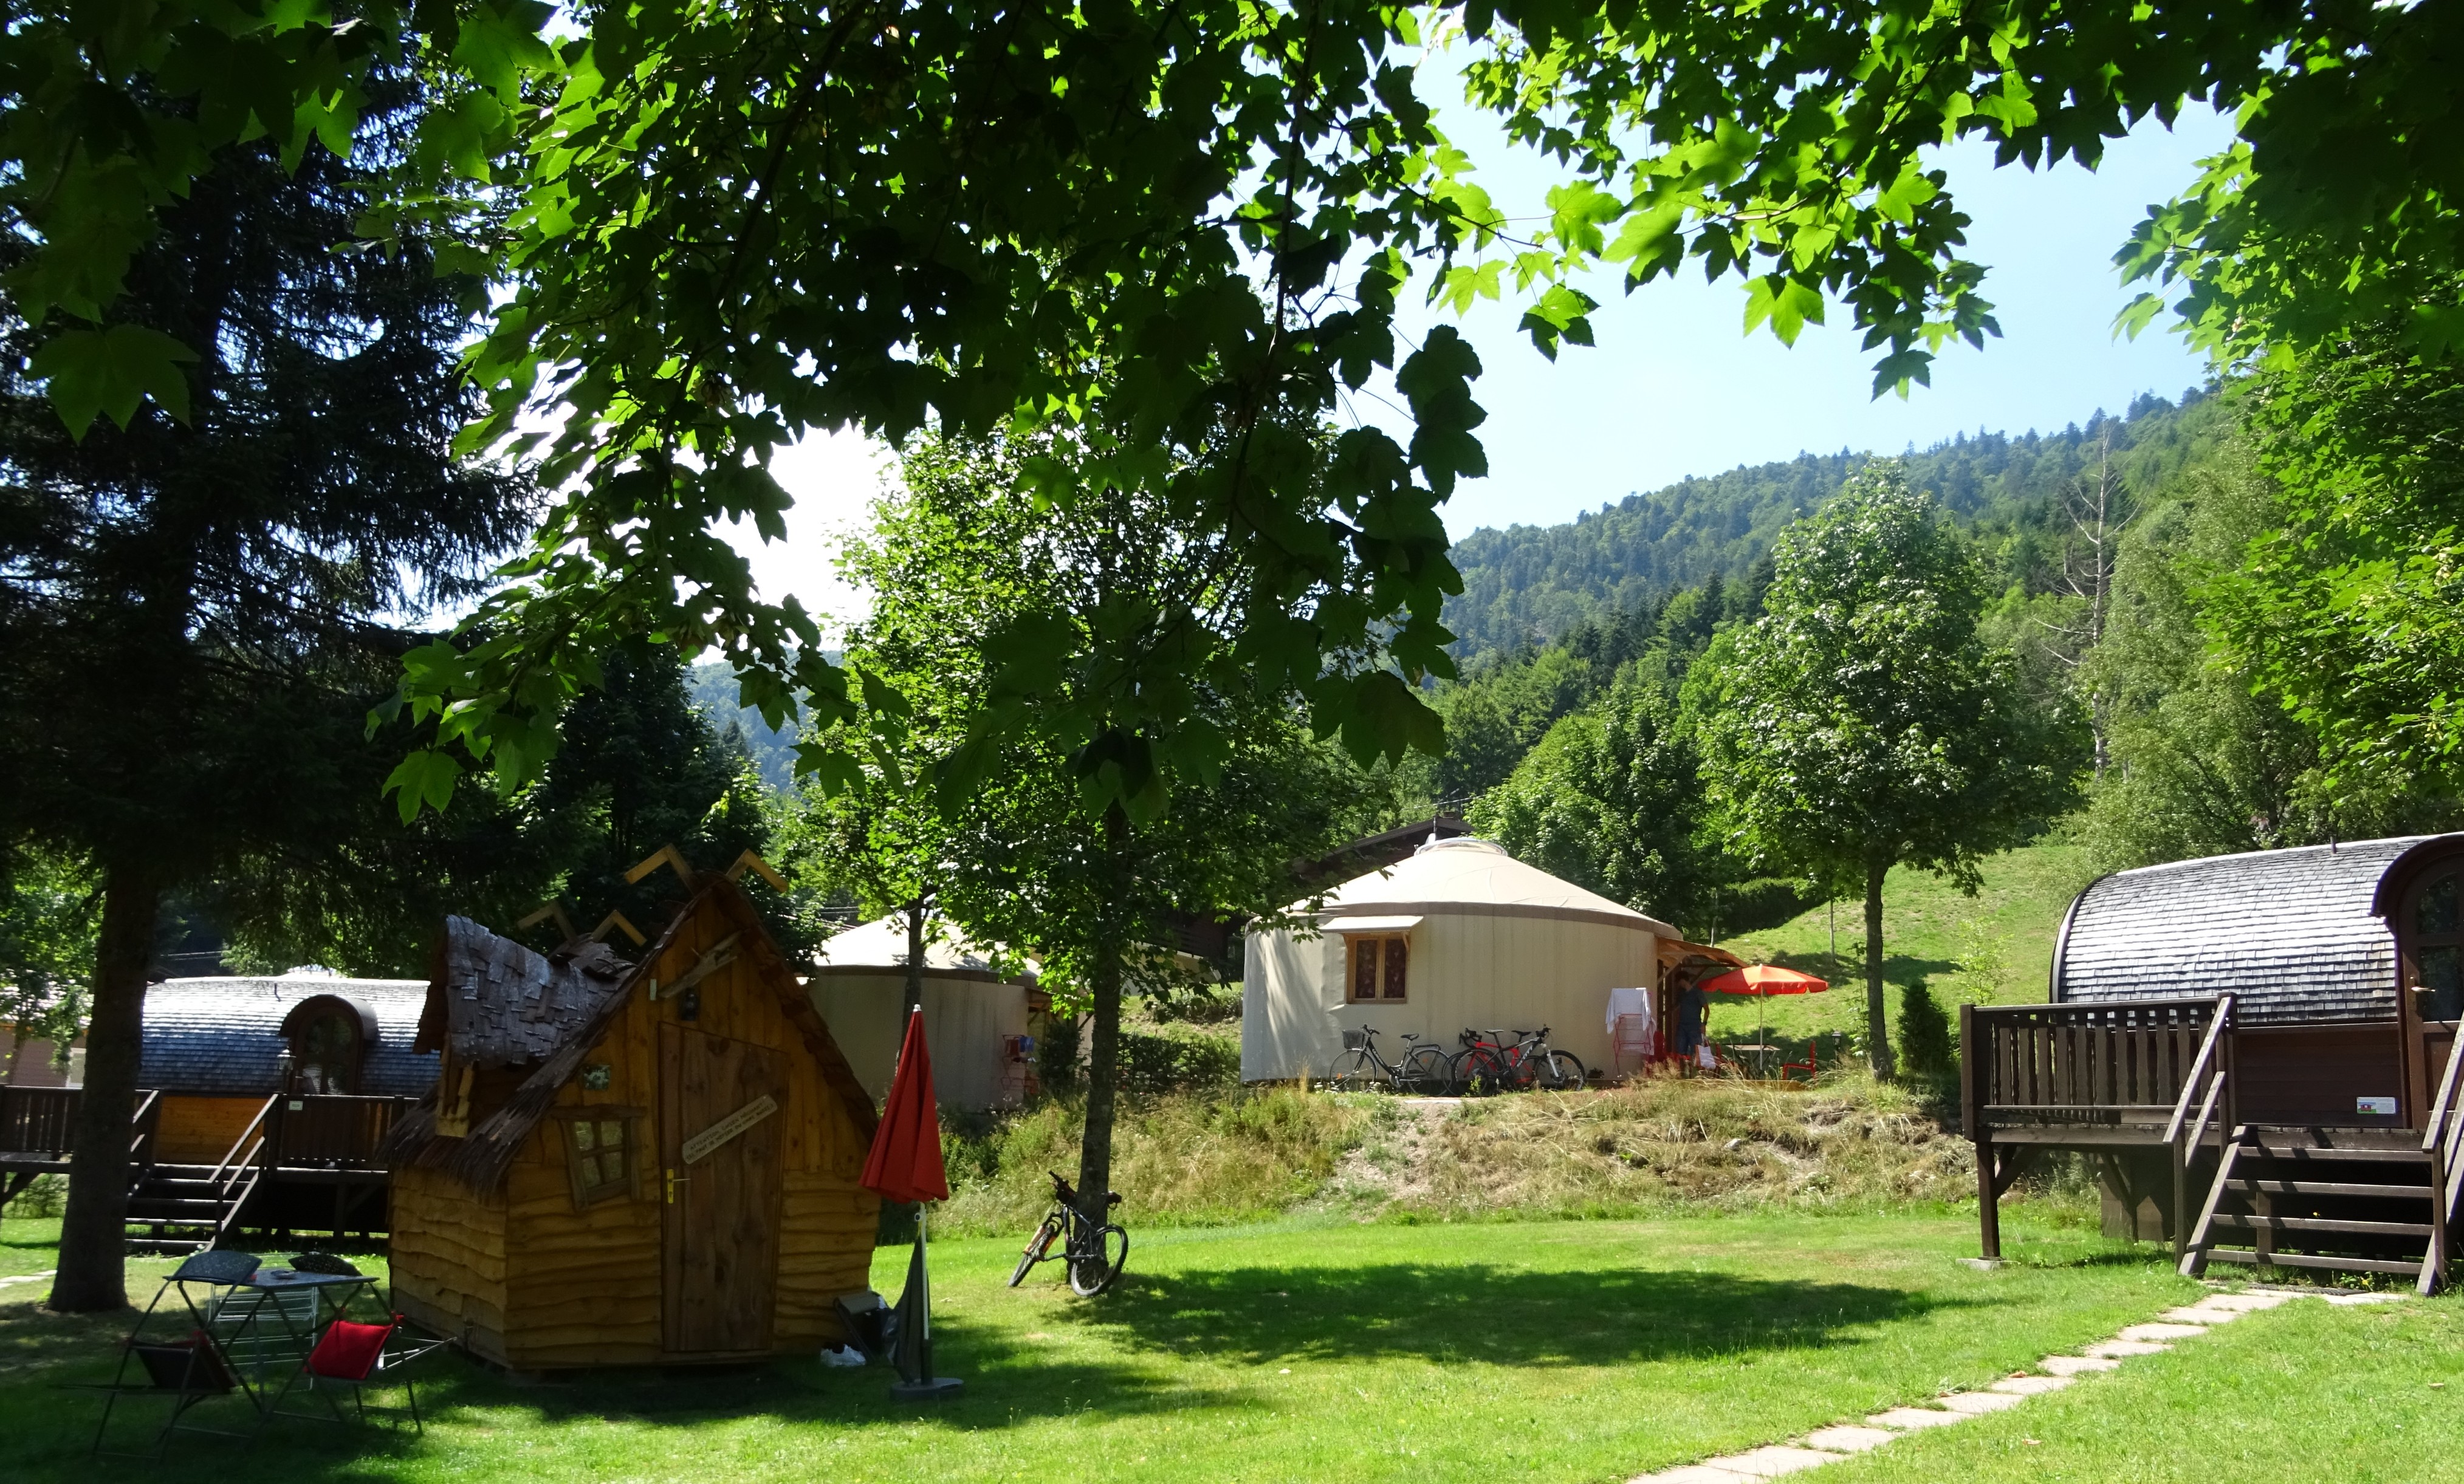  Camping Belle Hutte - La Bresse